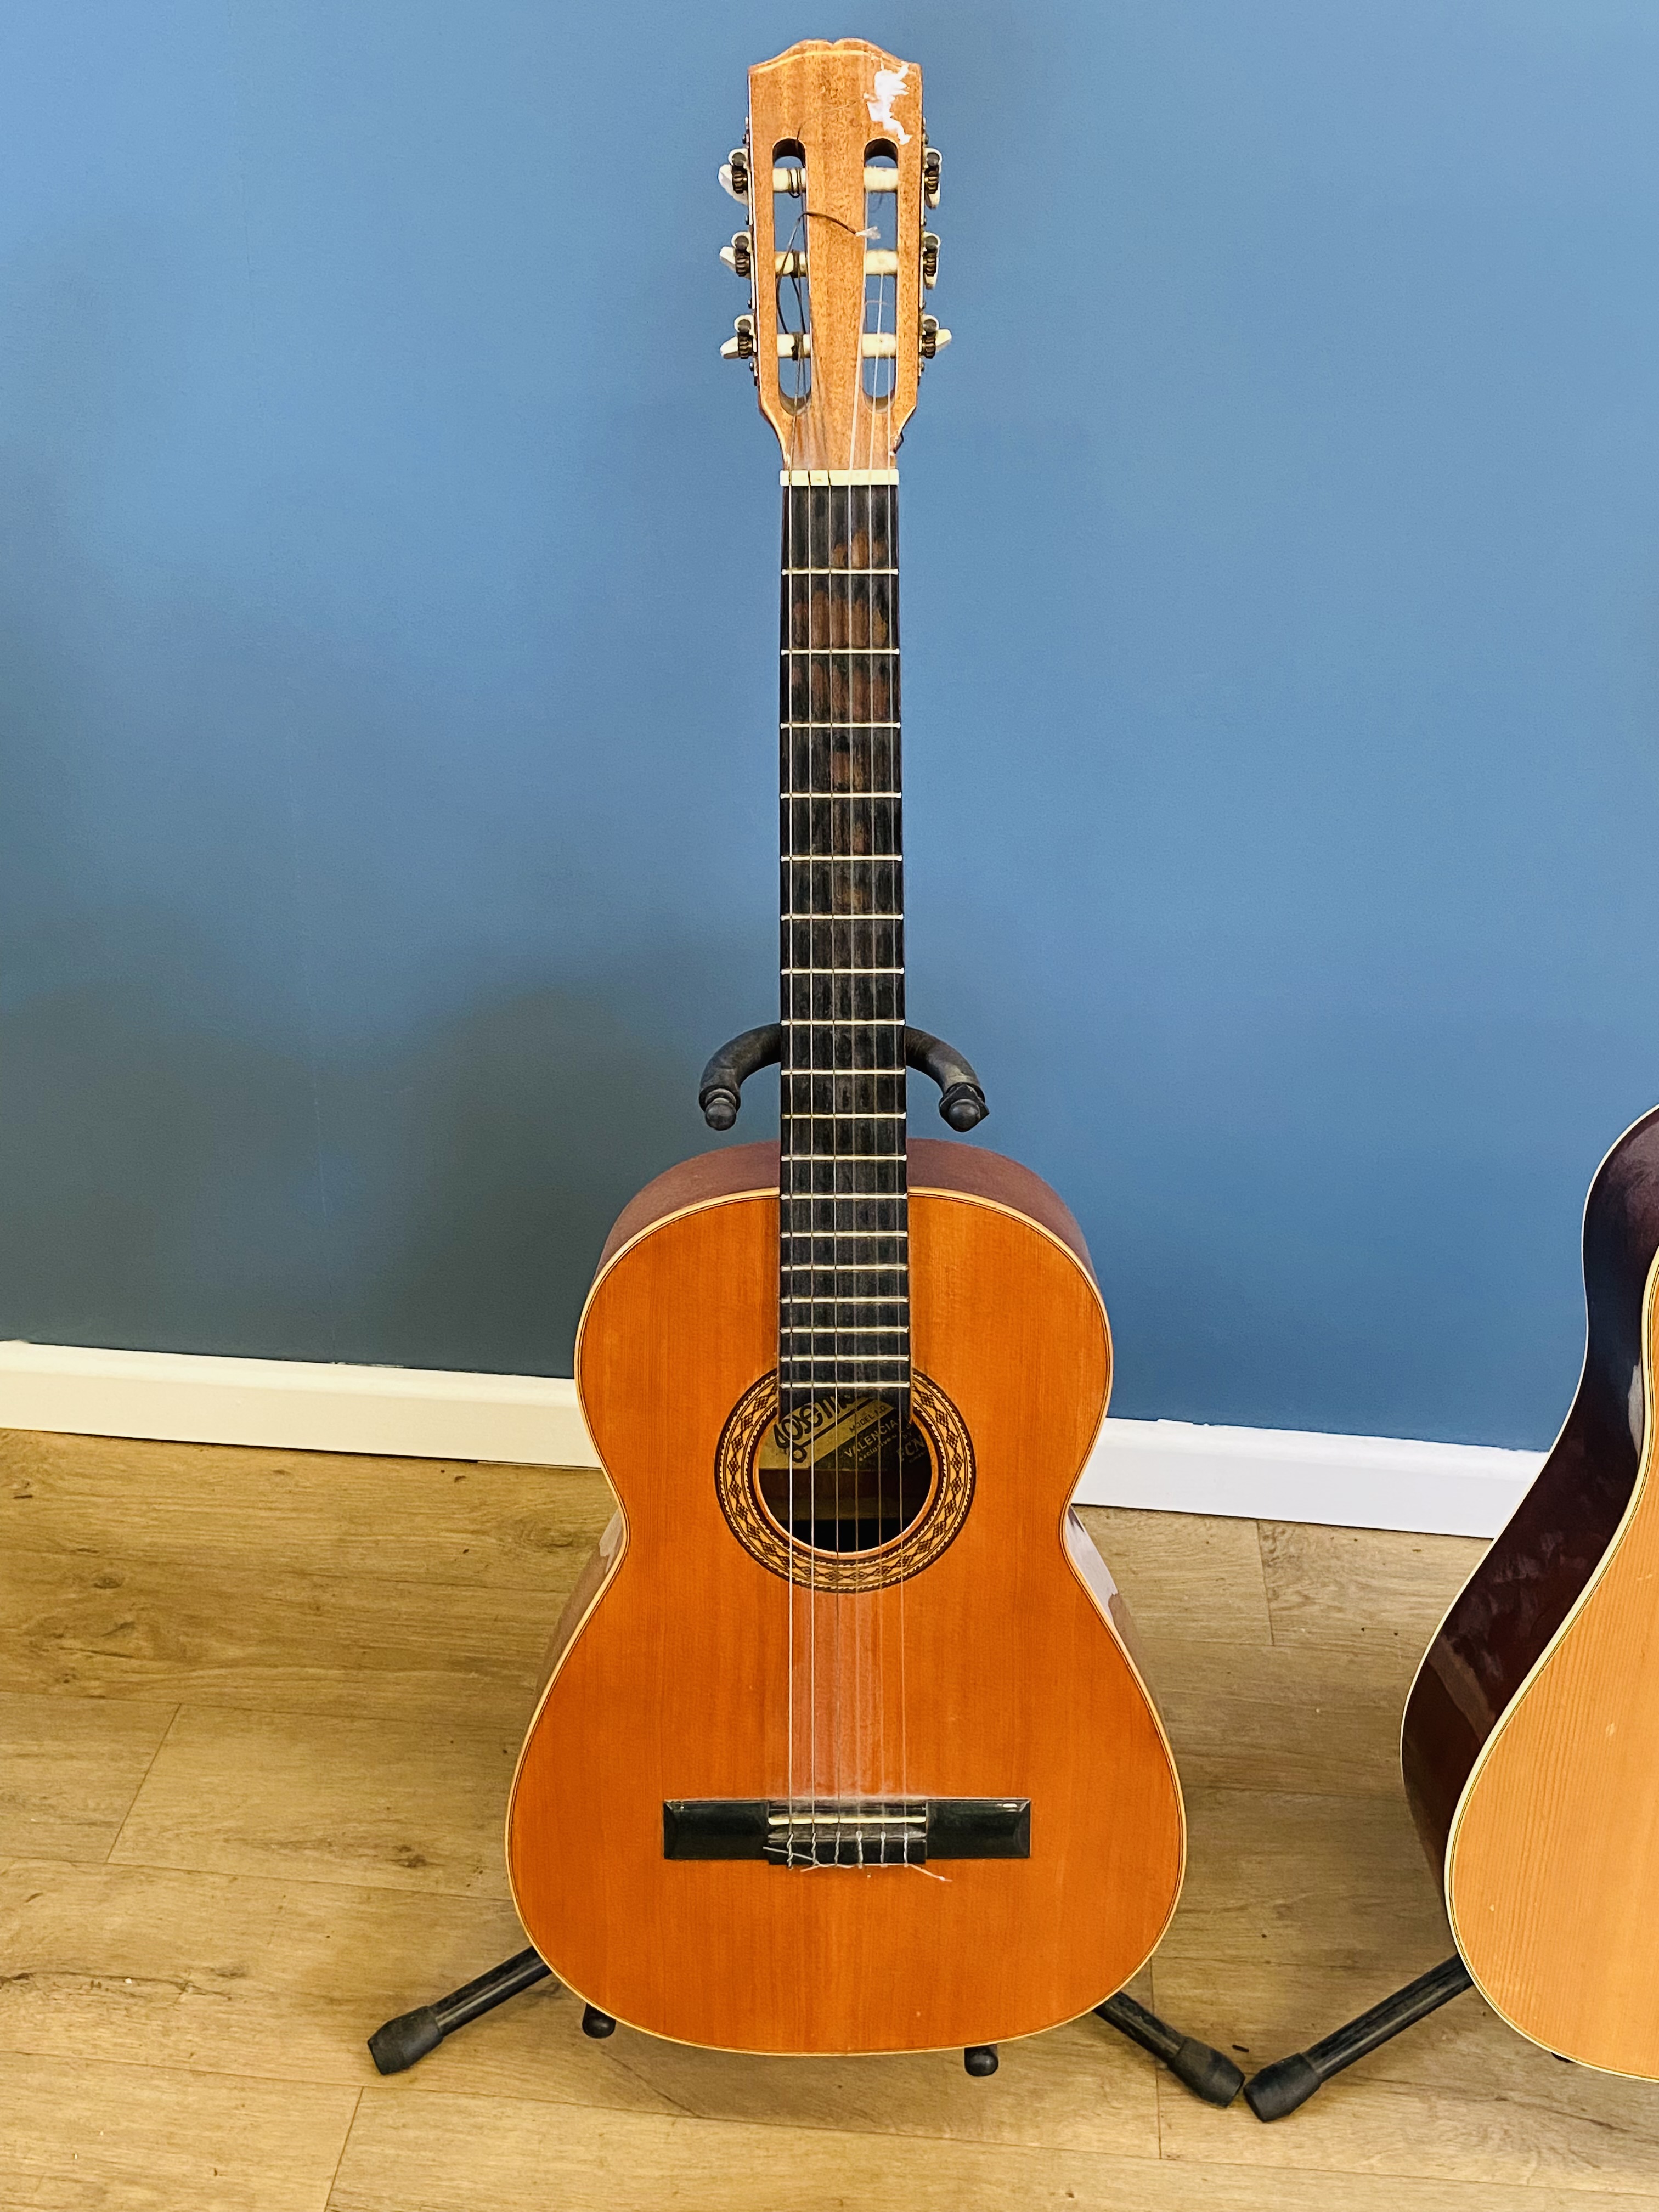 Angeliqa 12 string acoustic guitar a Jose Masymas classical guitar. - Image 4 of 4